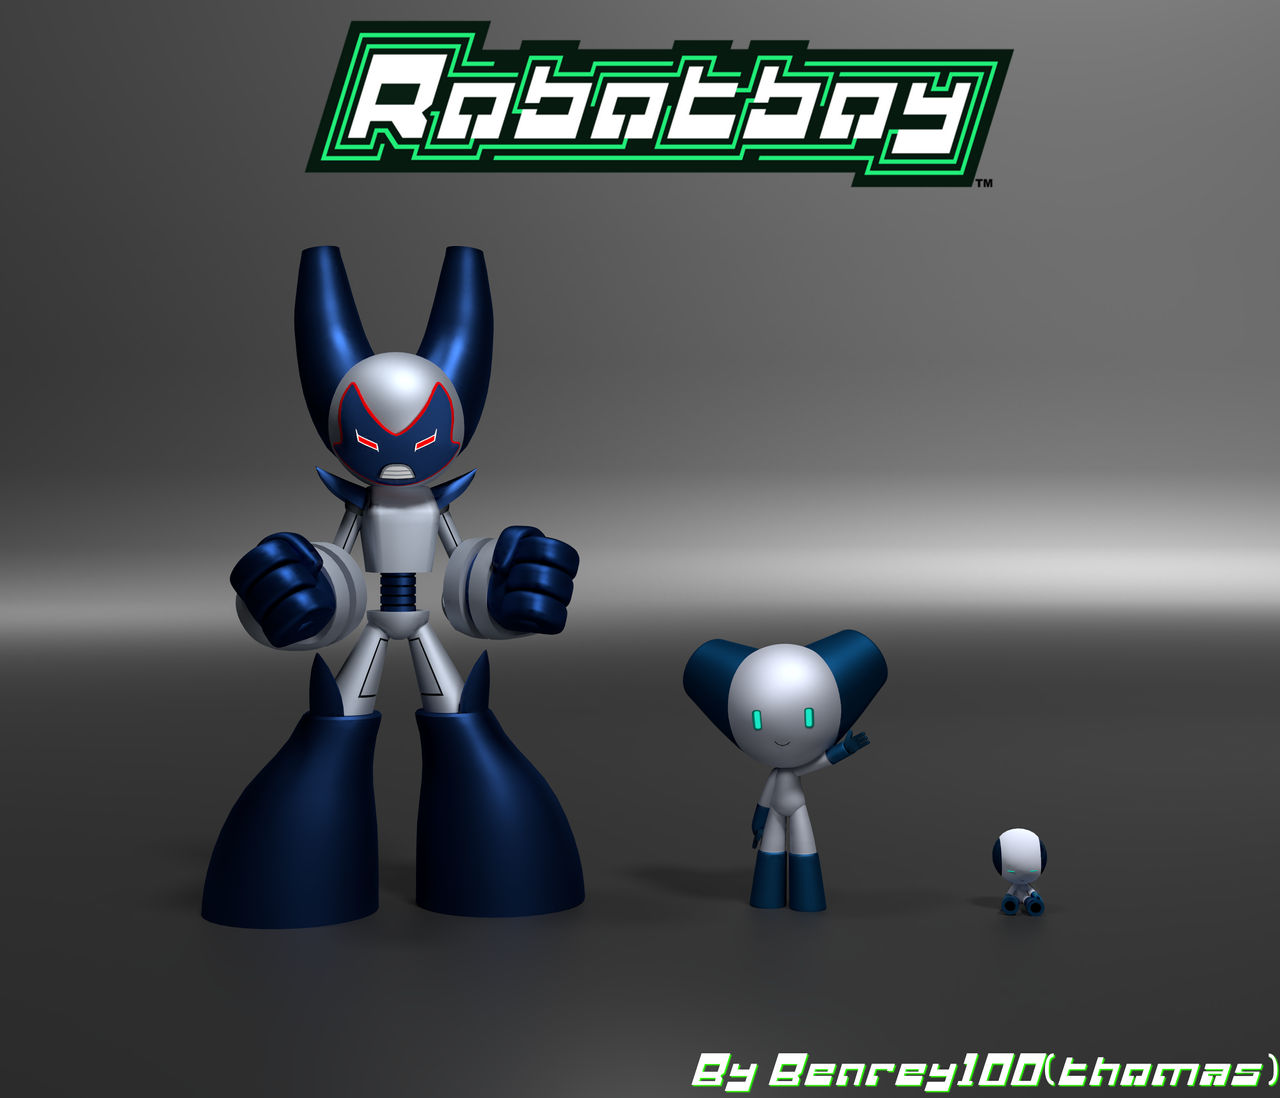 Robotboy - Tommy Turnbull 3d - 3D model by thomas1000 (@thomas1000)  [ce553d2]